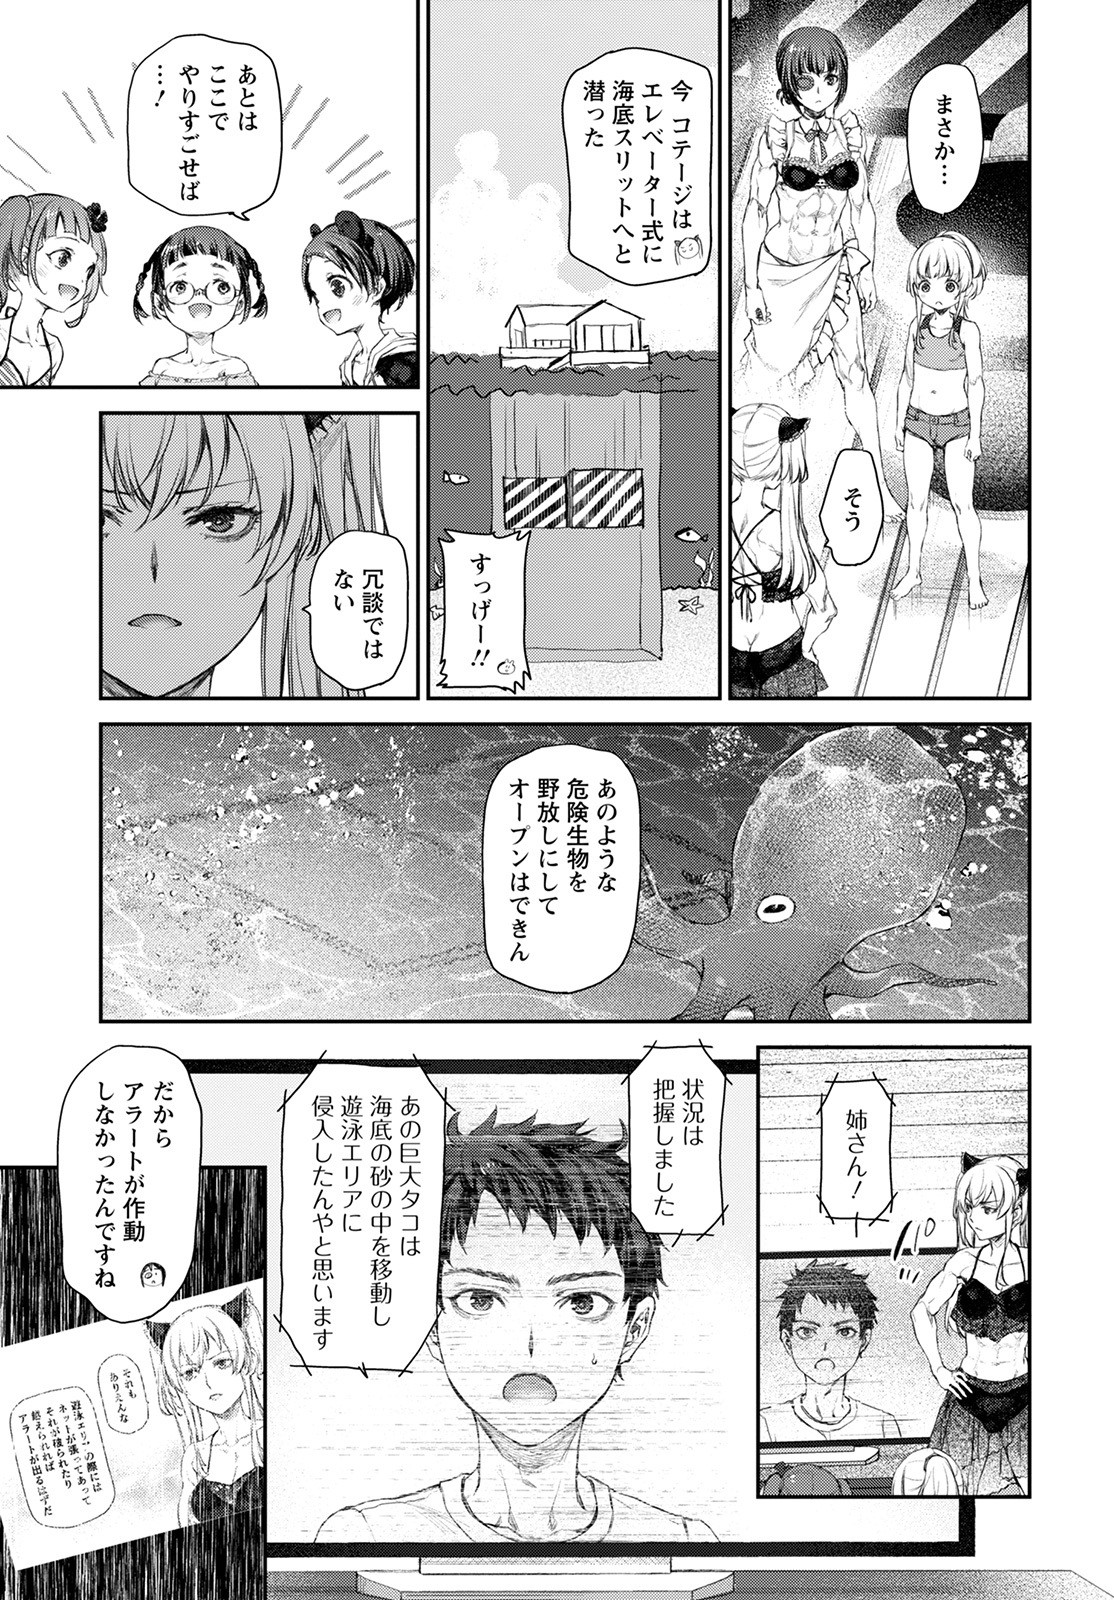 Uchi no Maid ga Uzasugiru! - Chapter 51 - Page 21